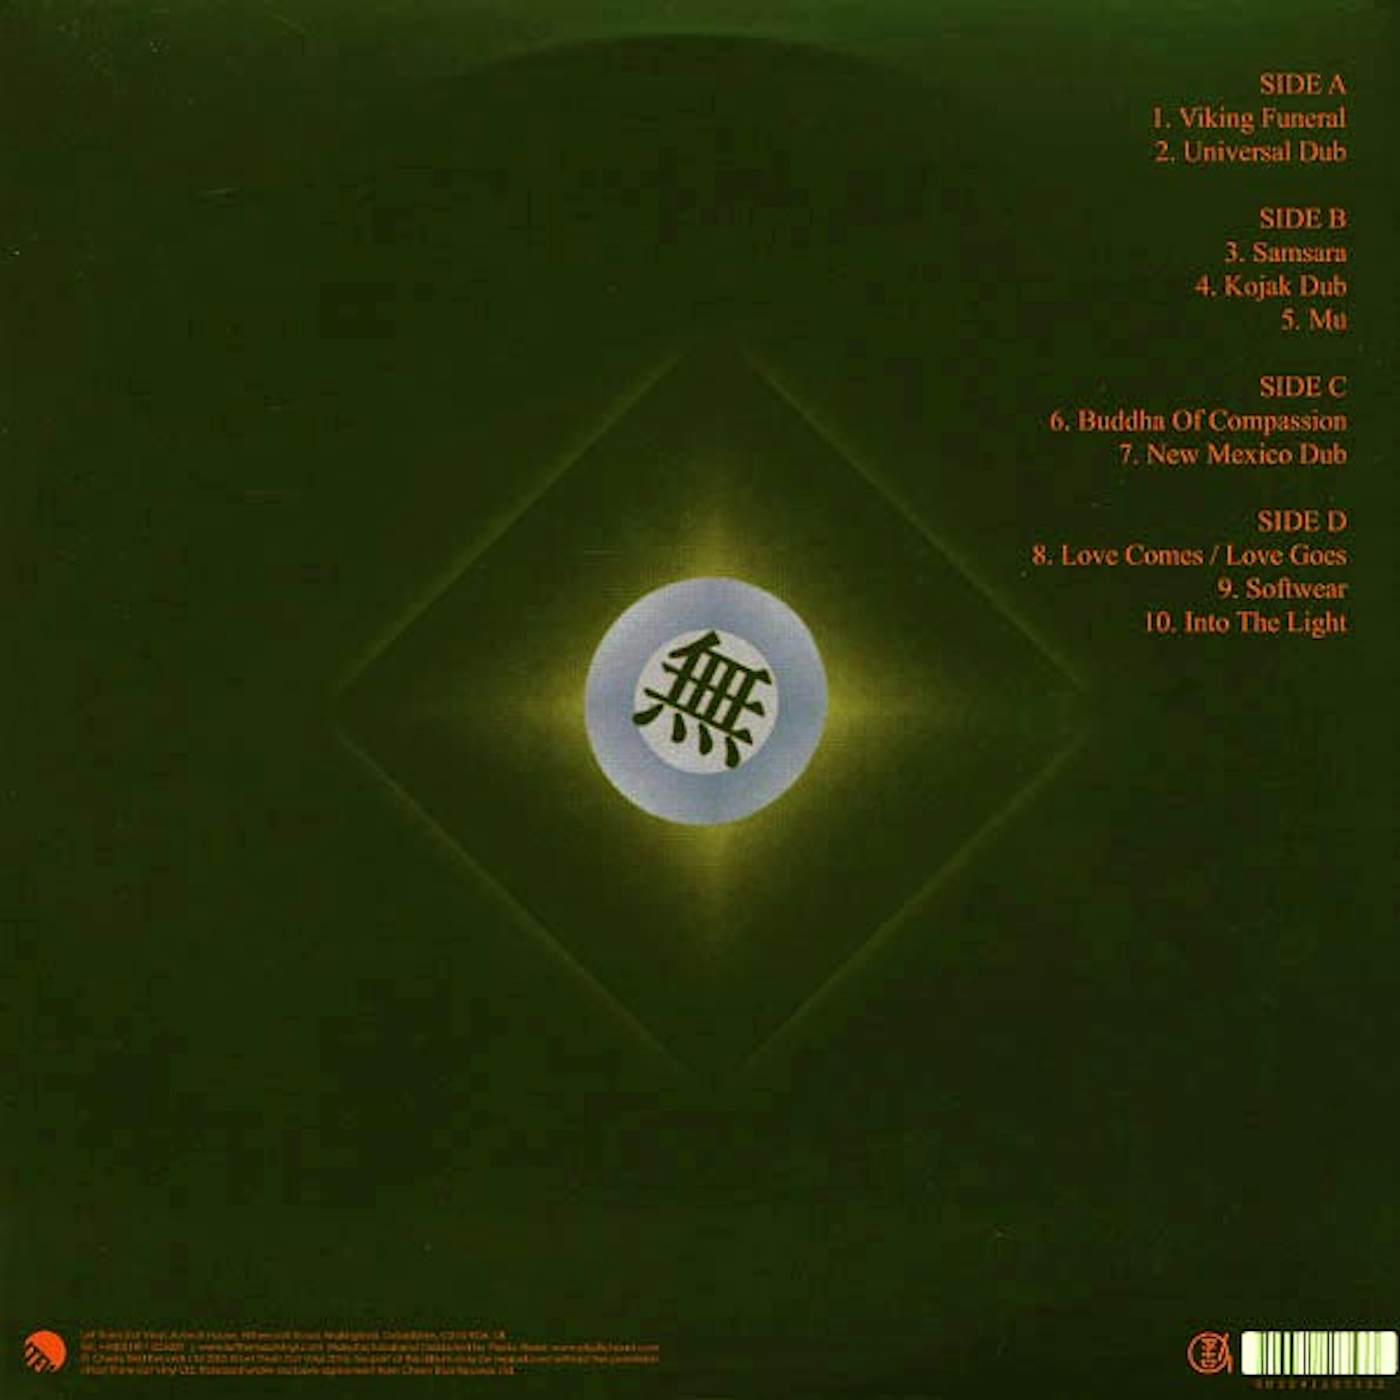 Jah Wobble  LP -  Mu (Vinyl)